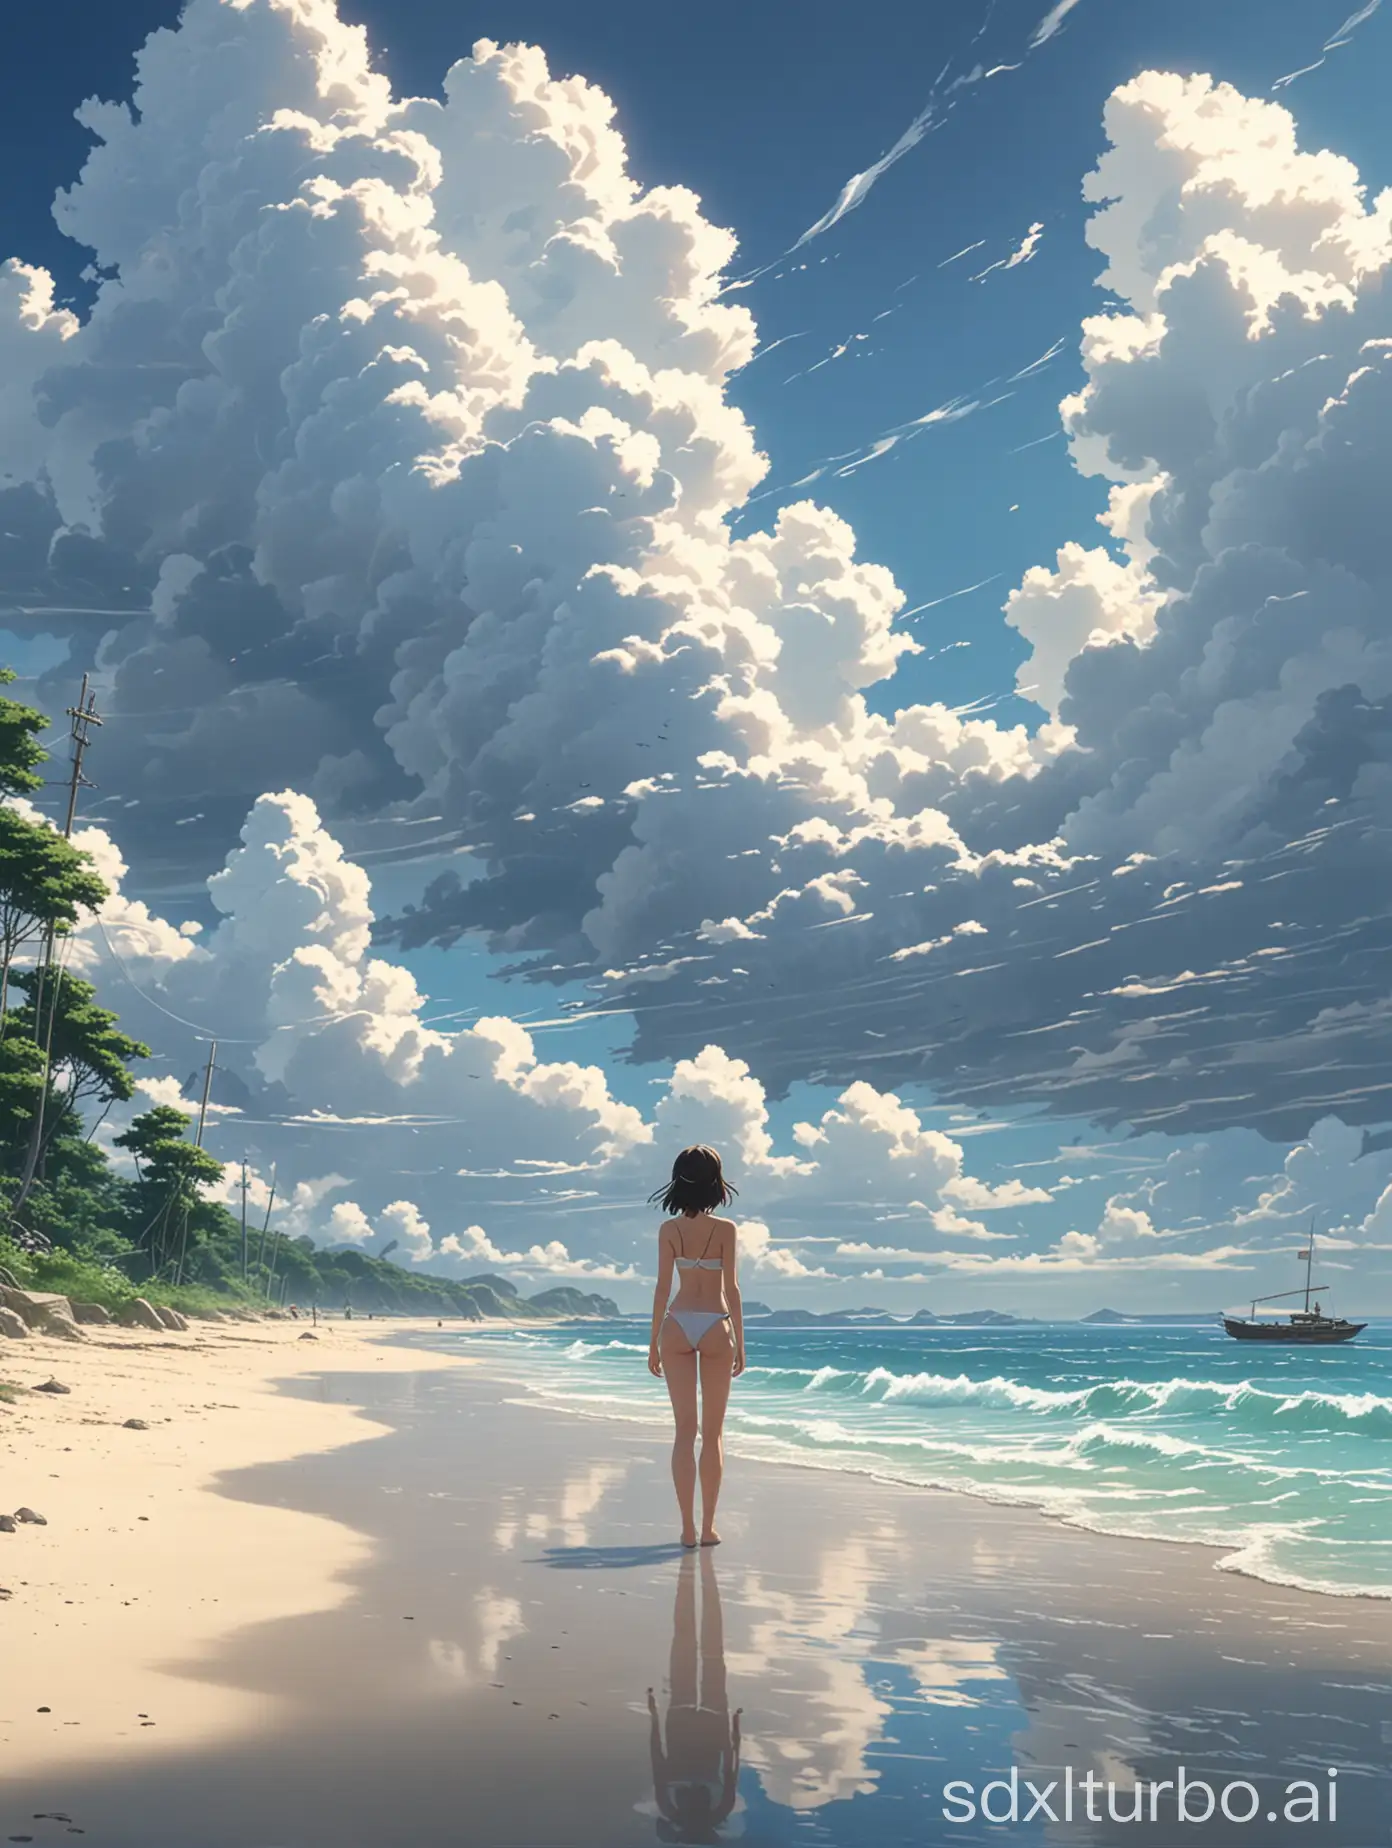 makoto shinkai style,full of tall fluffy white clouds,far below is an oceanshore with a girl wearing a 2 piece bikini standing,shadows,cinematic,white sand,ship afar,studio Ghibli anime